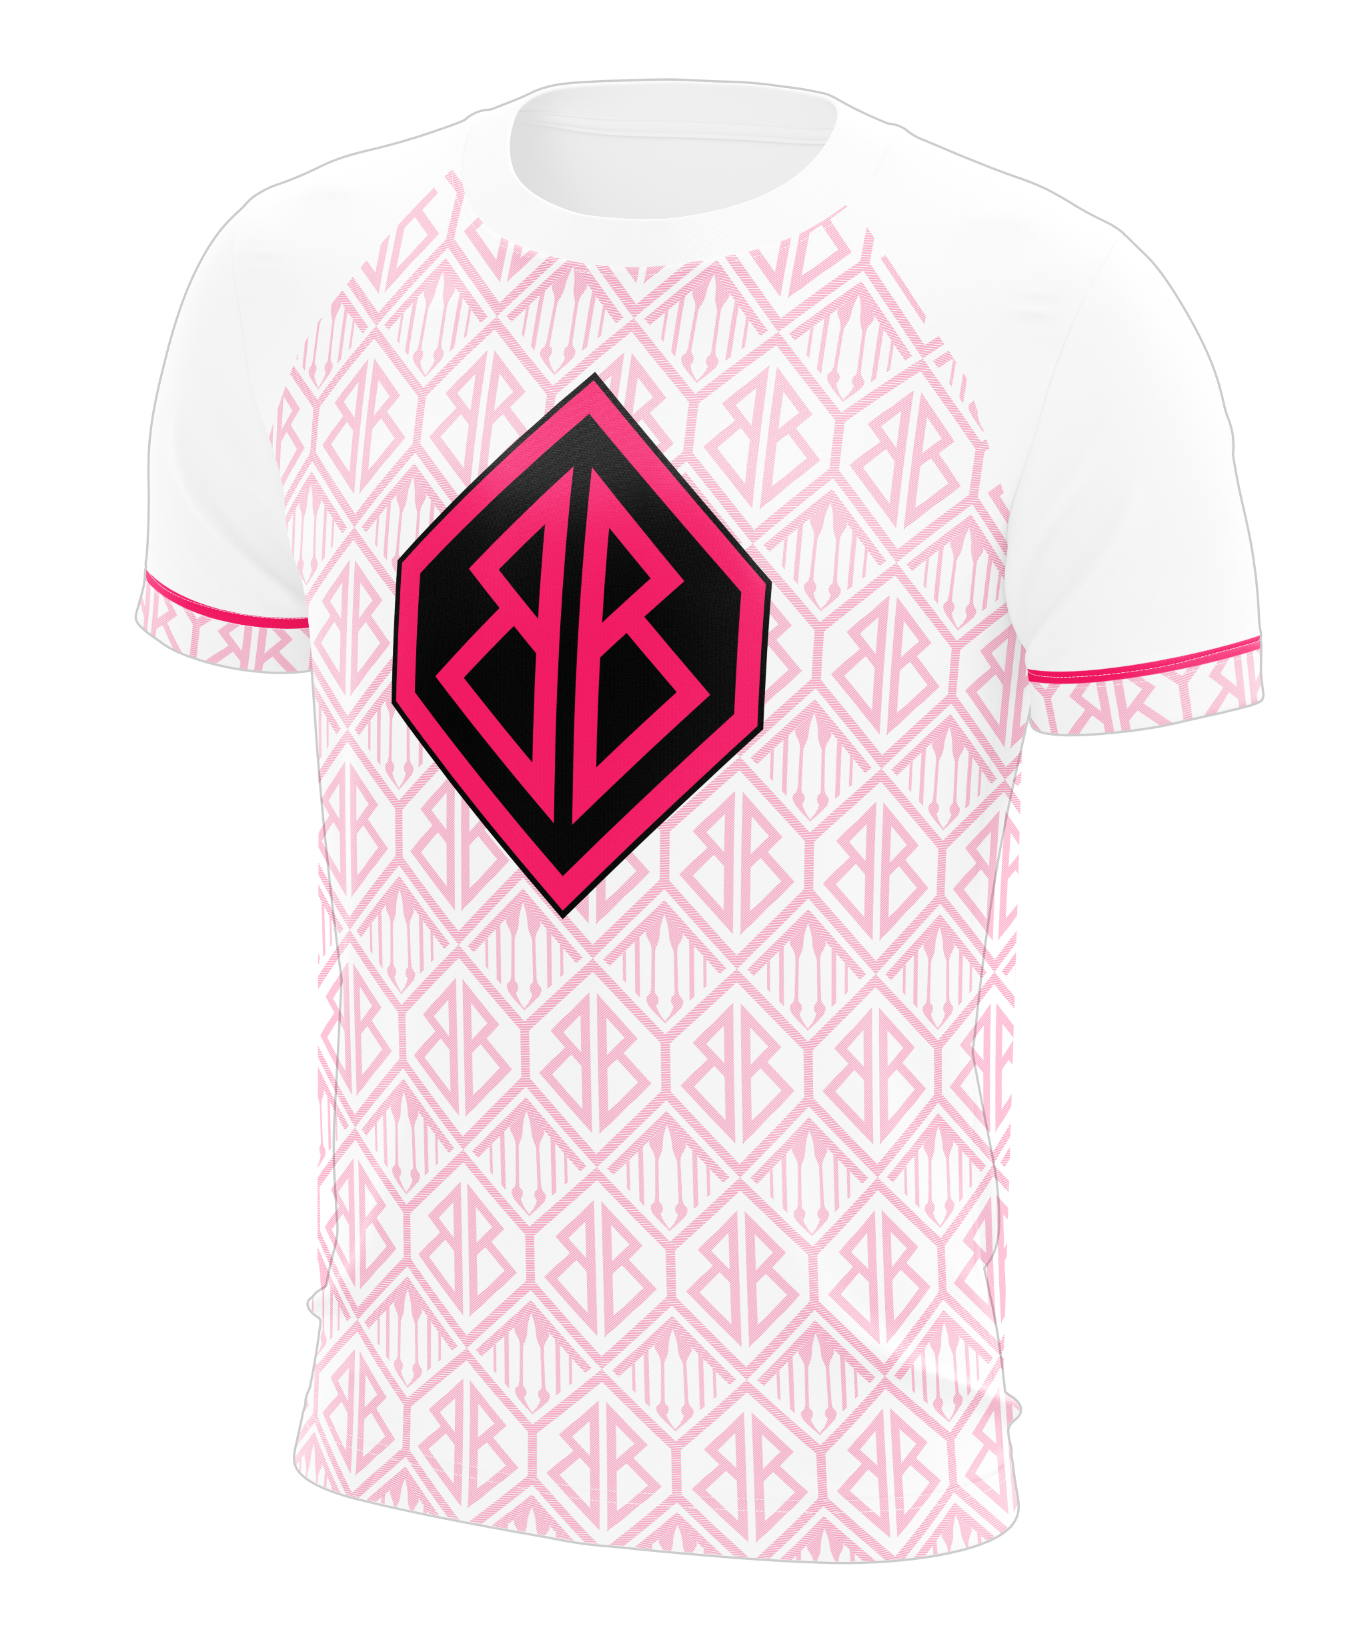 NEW Team Allcornhole White/Pink Customized AllCornhole Jersey